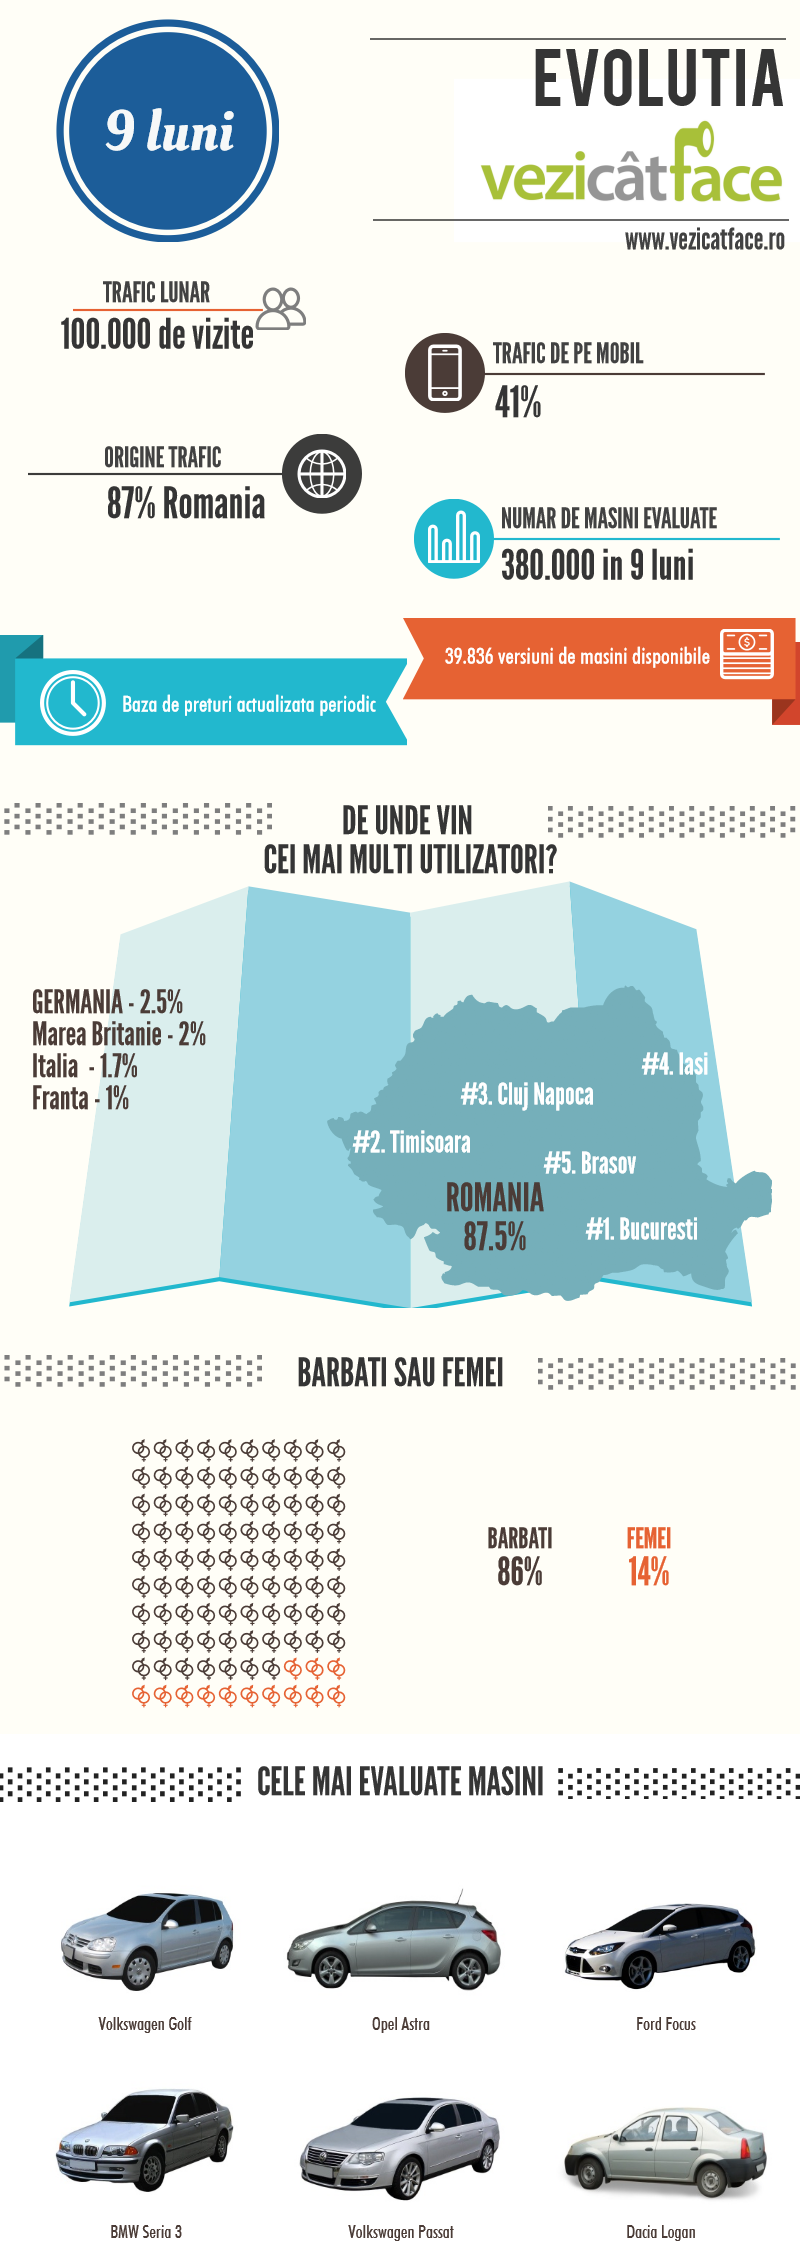 Infografic - Evolutia VeziCatFace.ro in primele 9 luni de la lansare